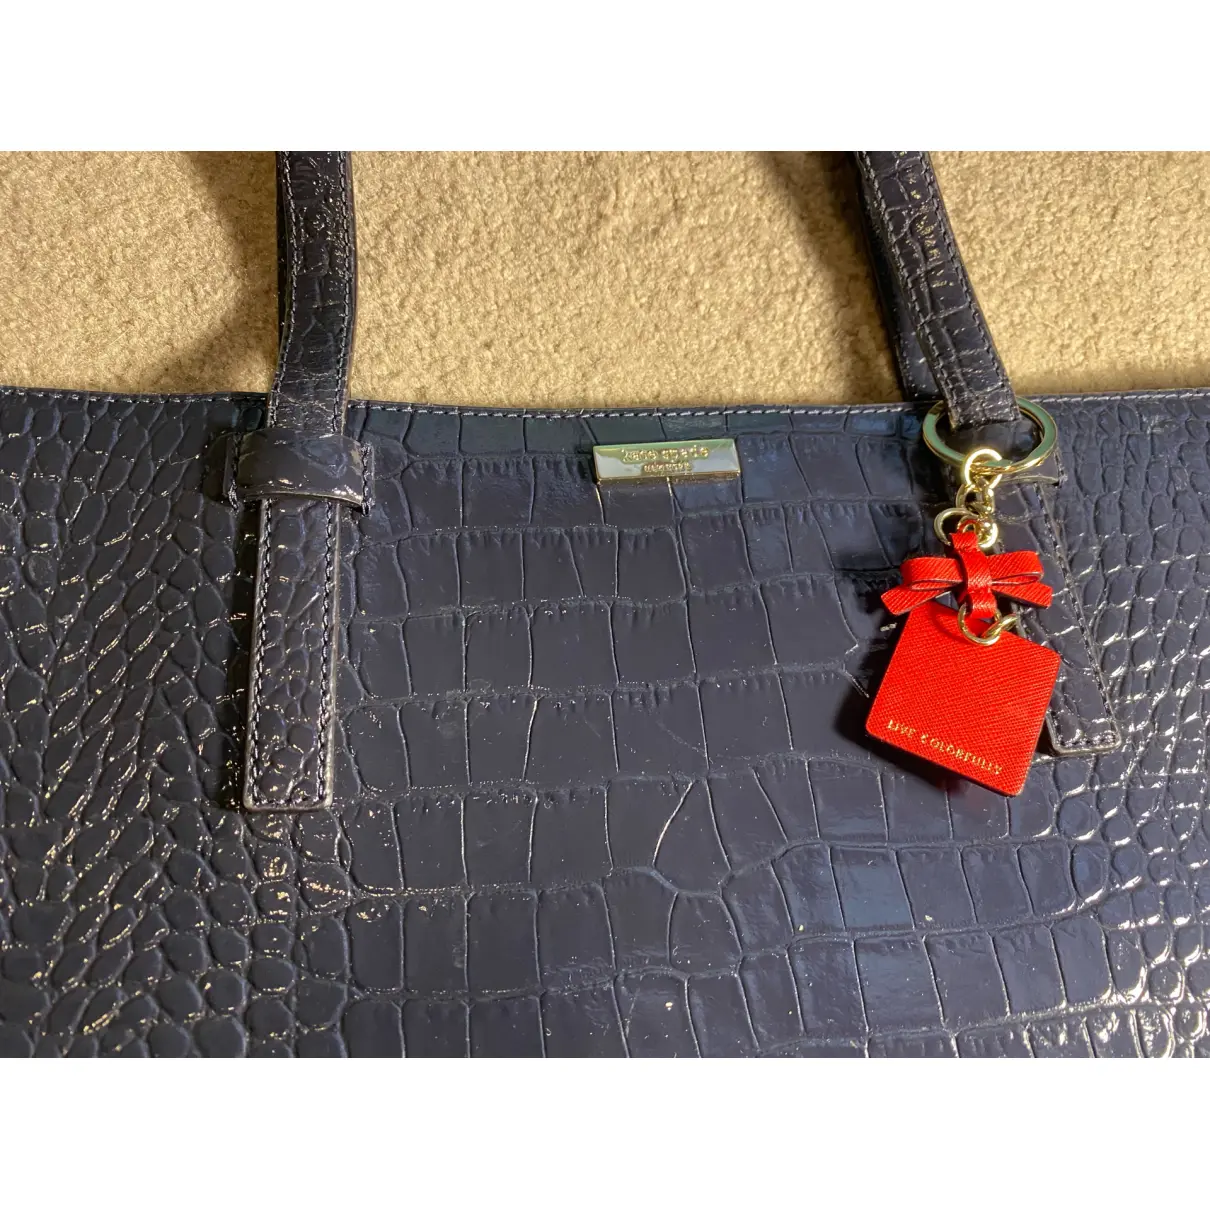 Buy Kate Spade Crocodile handbag online